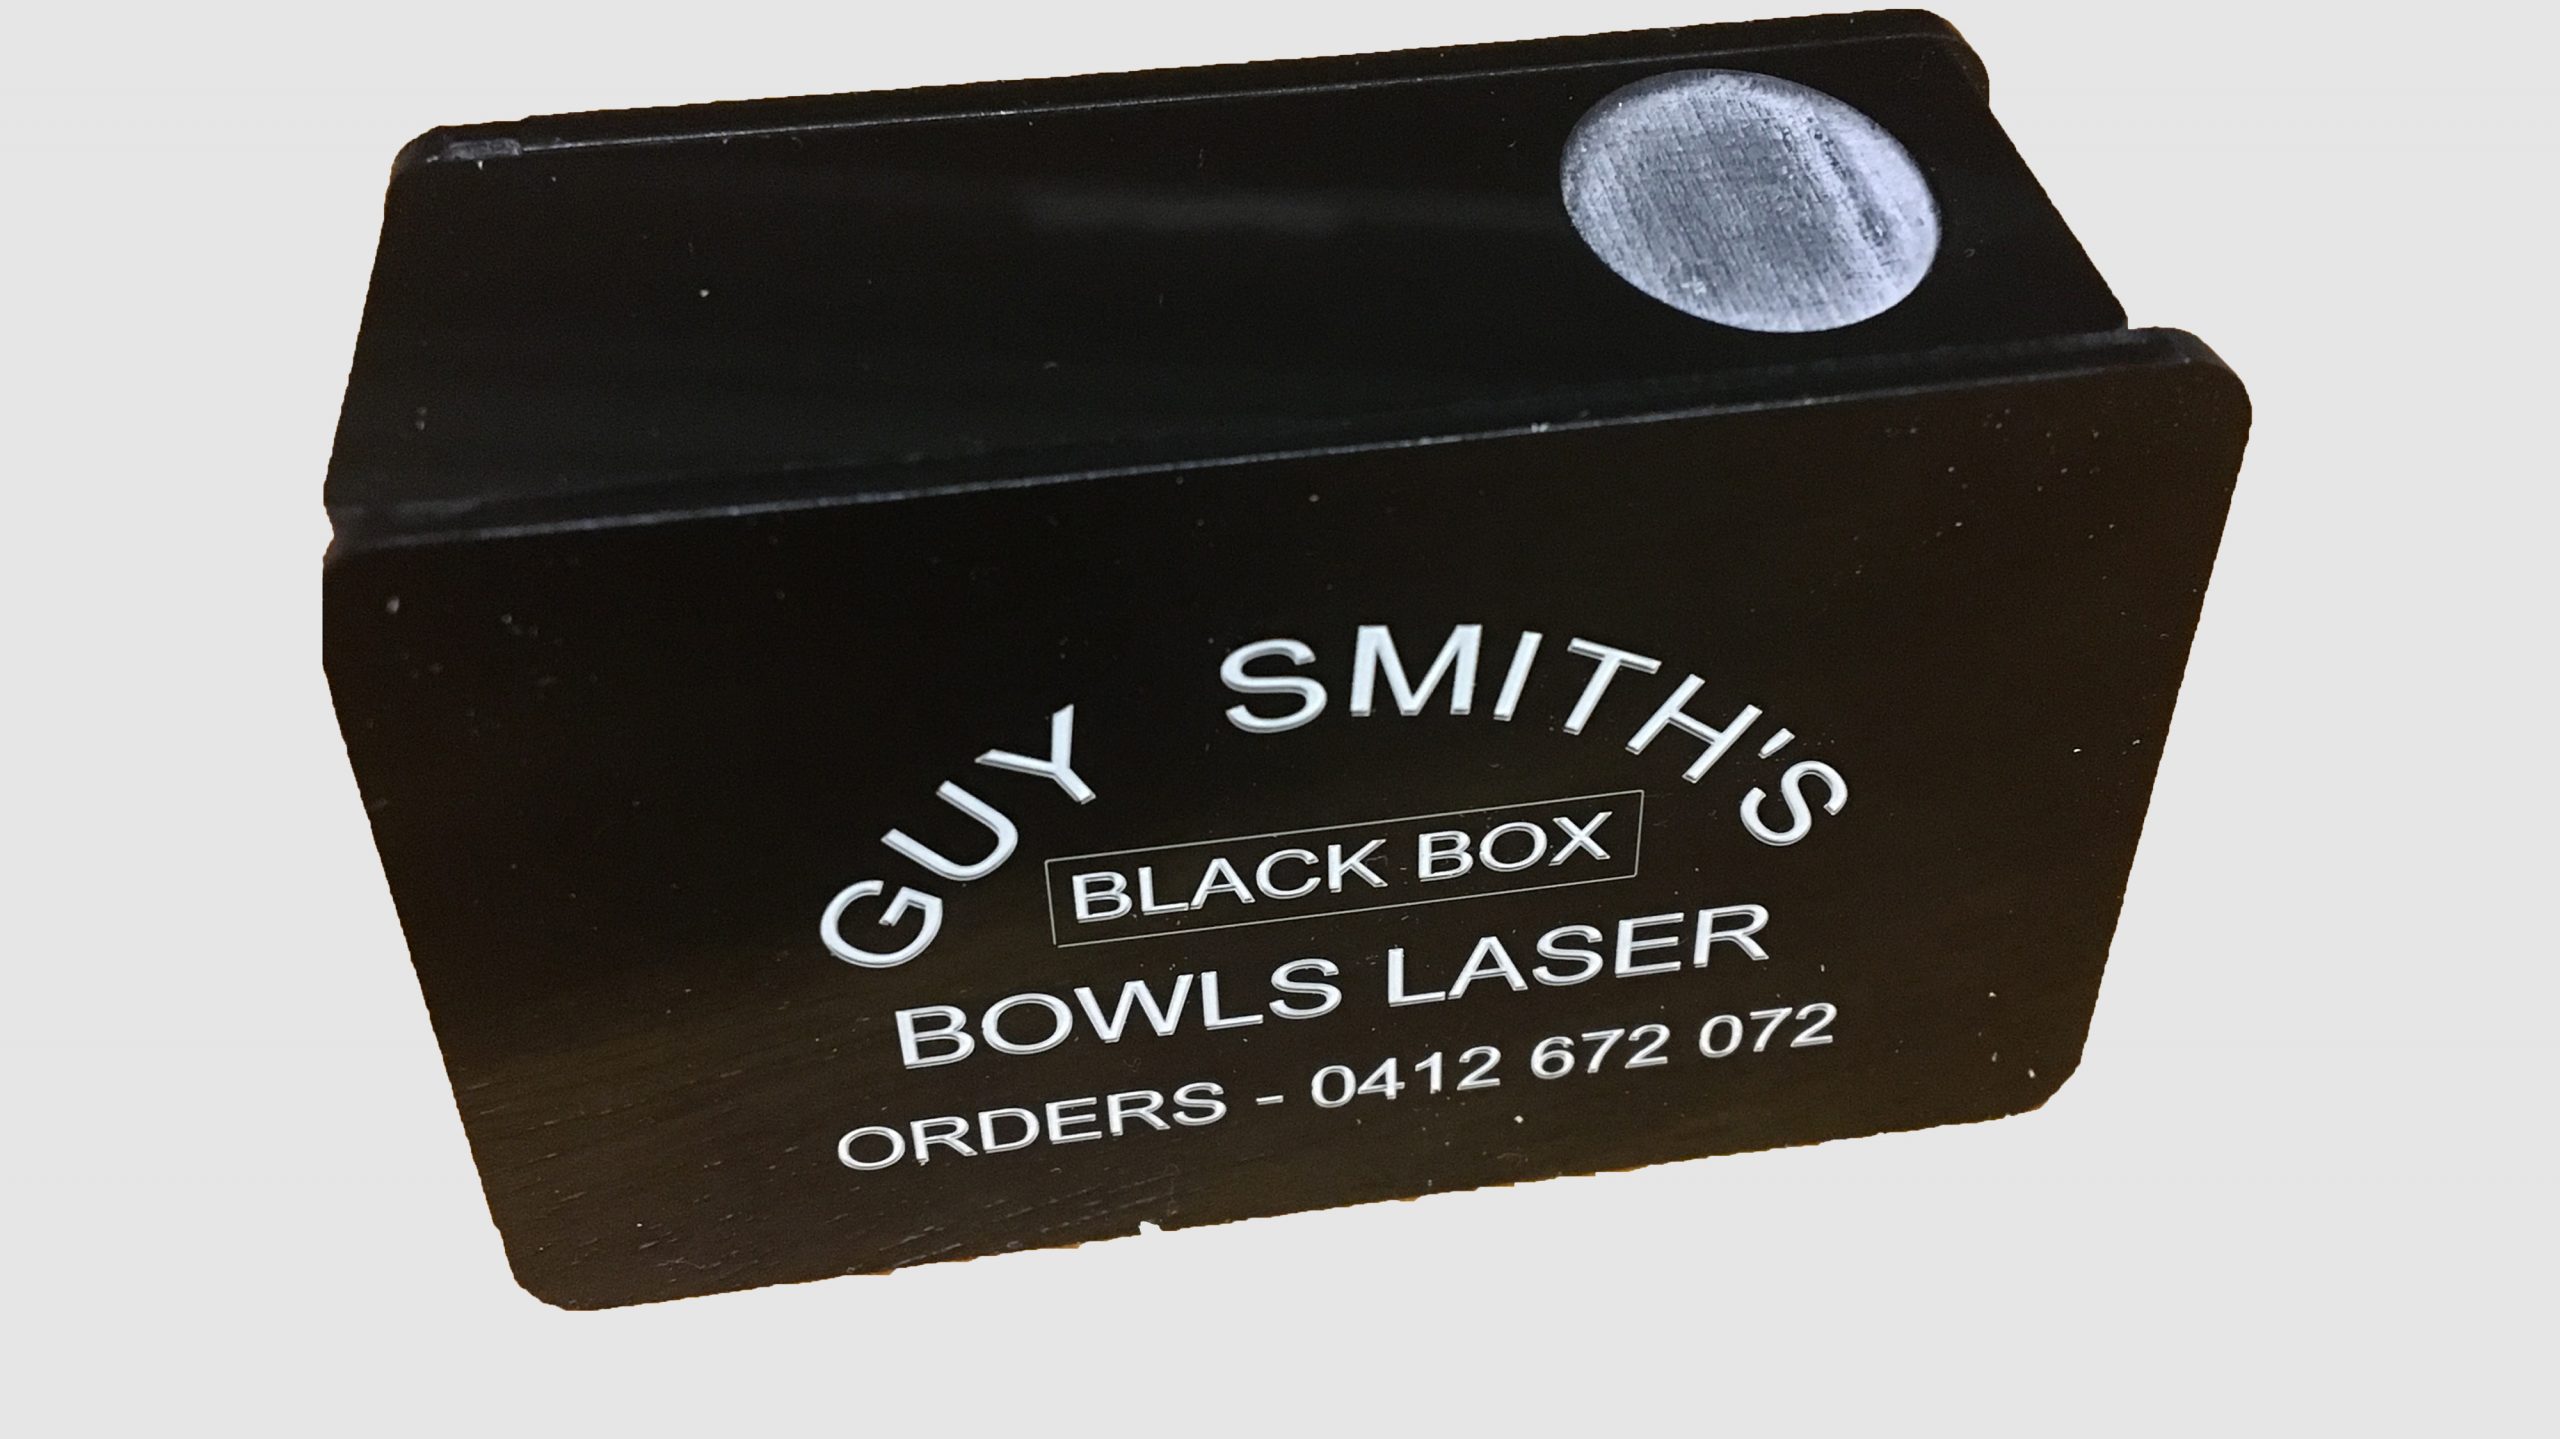 "Black Box" Bowls Laser